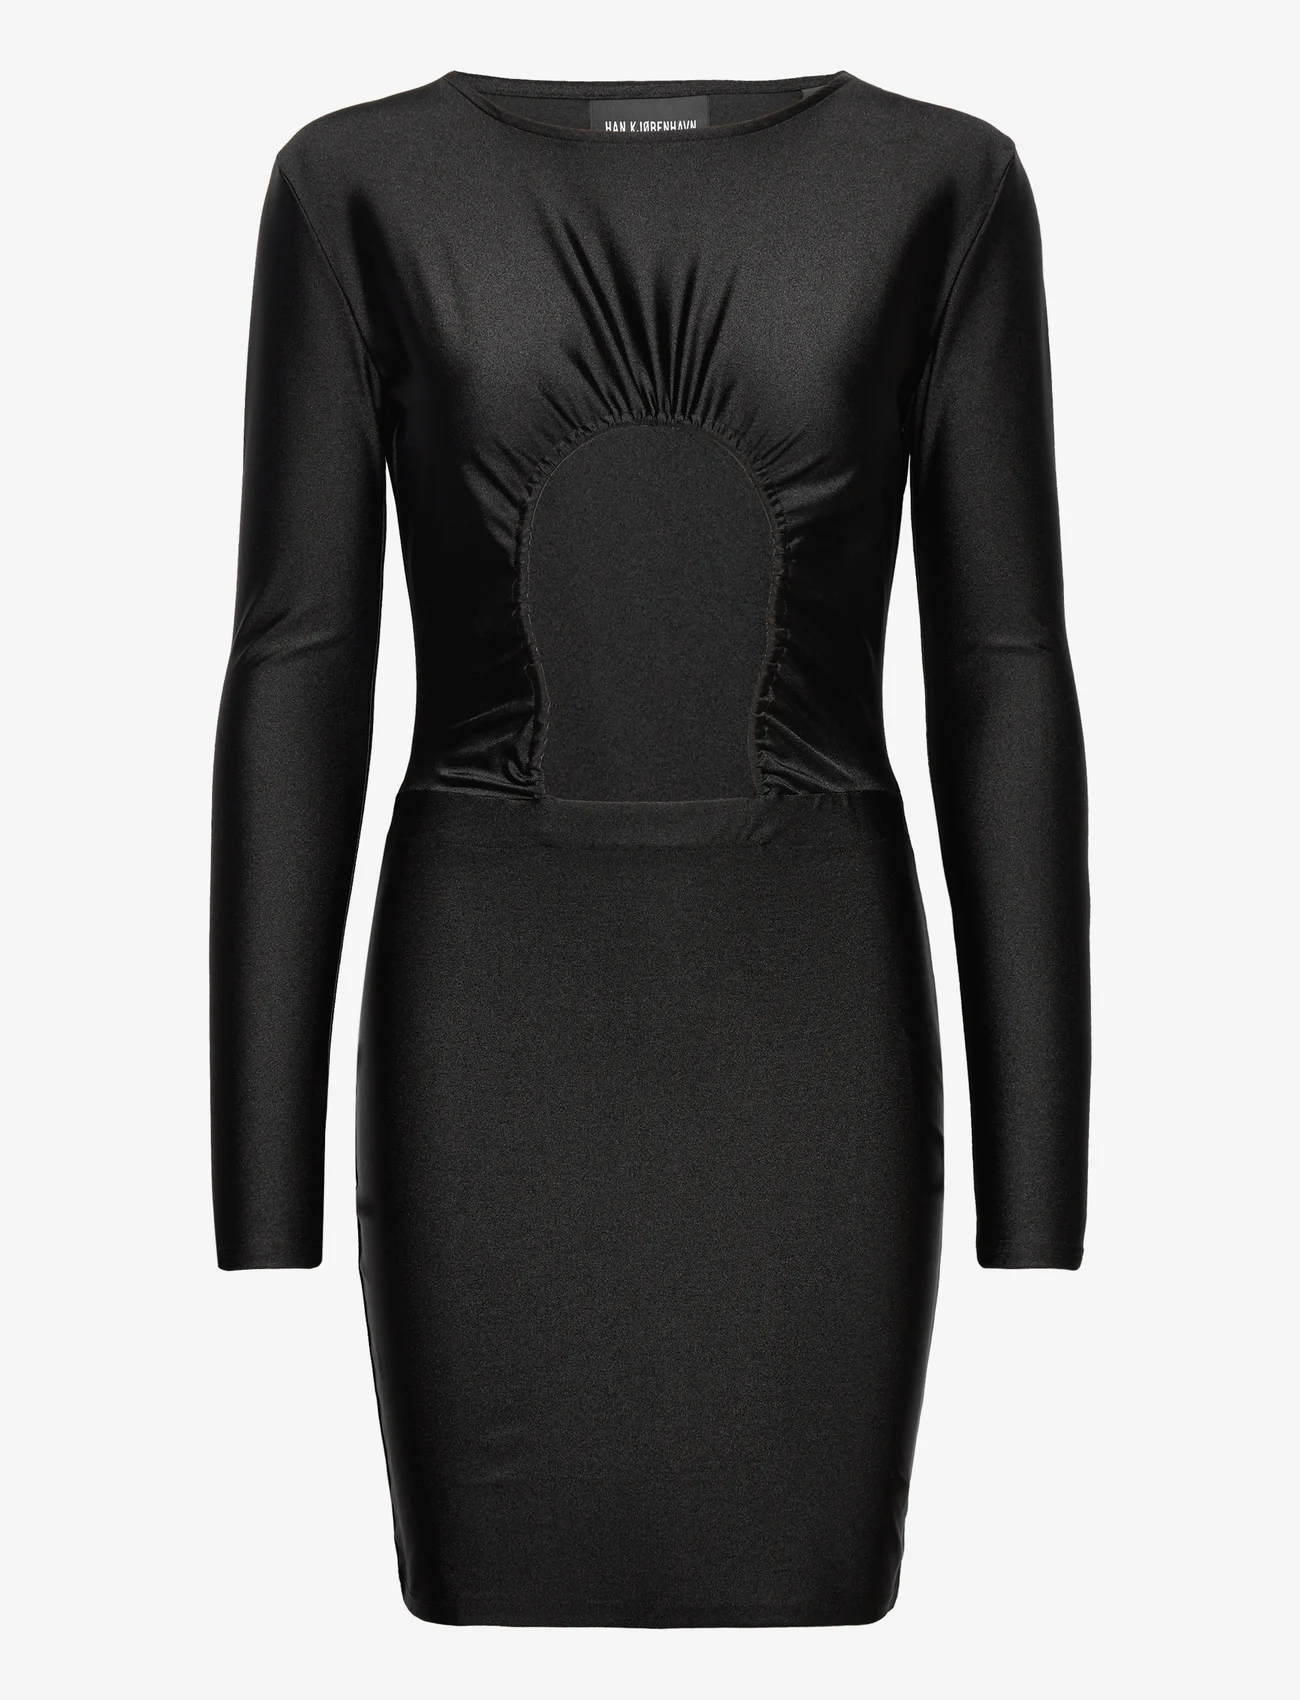 HAN Kjøbenhavn - Stretch Jersey Ruche Cut Out Dress - ballīšu apģērbs par outlet cenām - black - 0